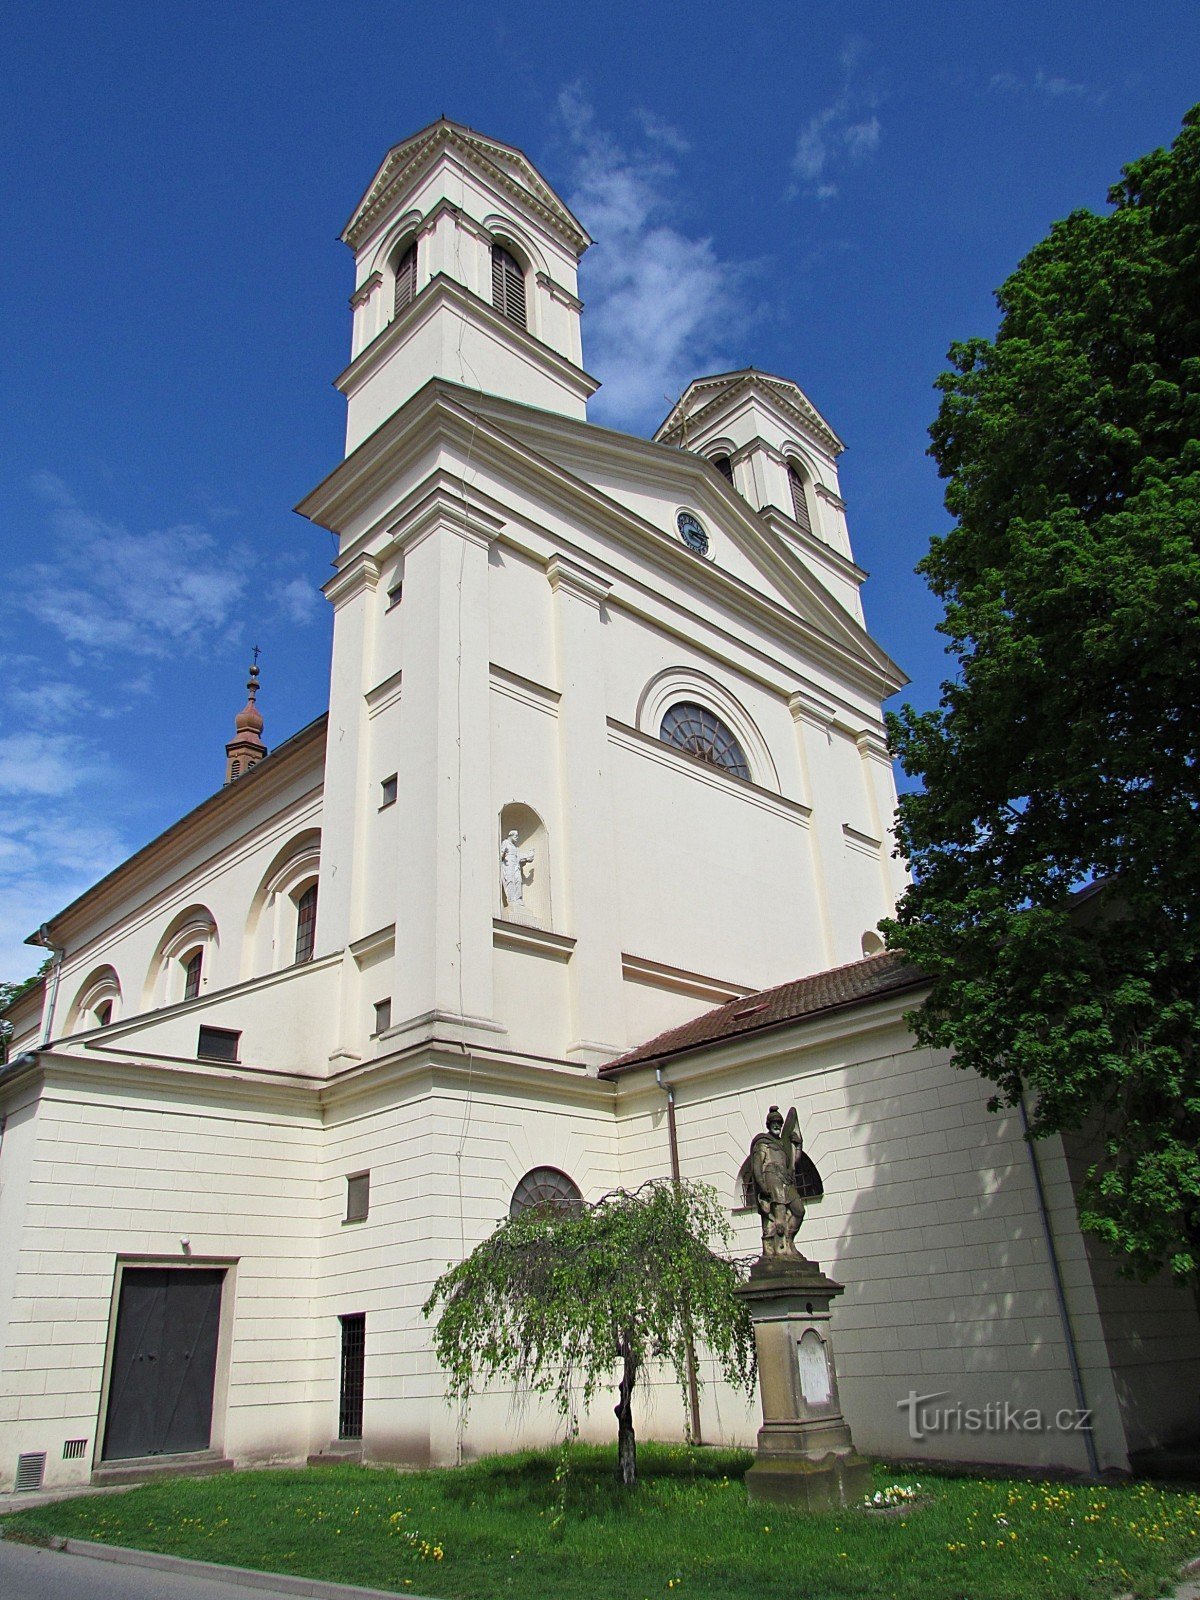 Bučovice - parish church of the Assumption of the Virgin Mary